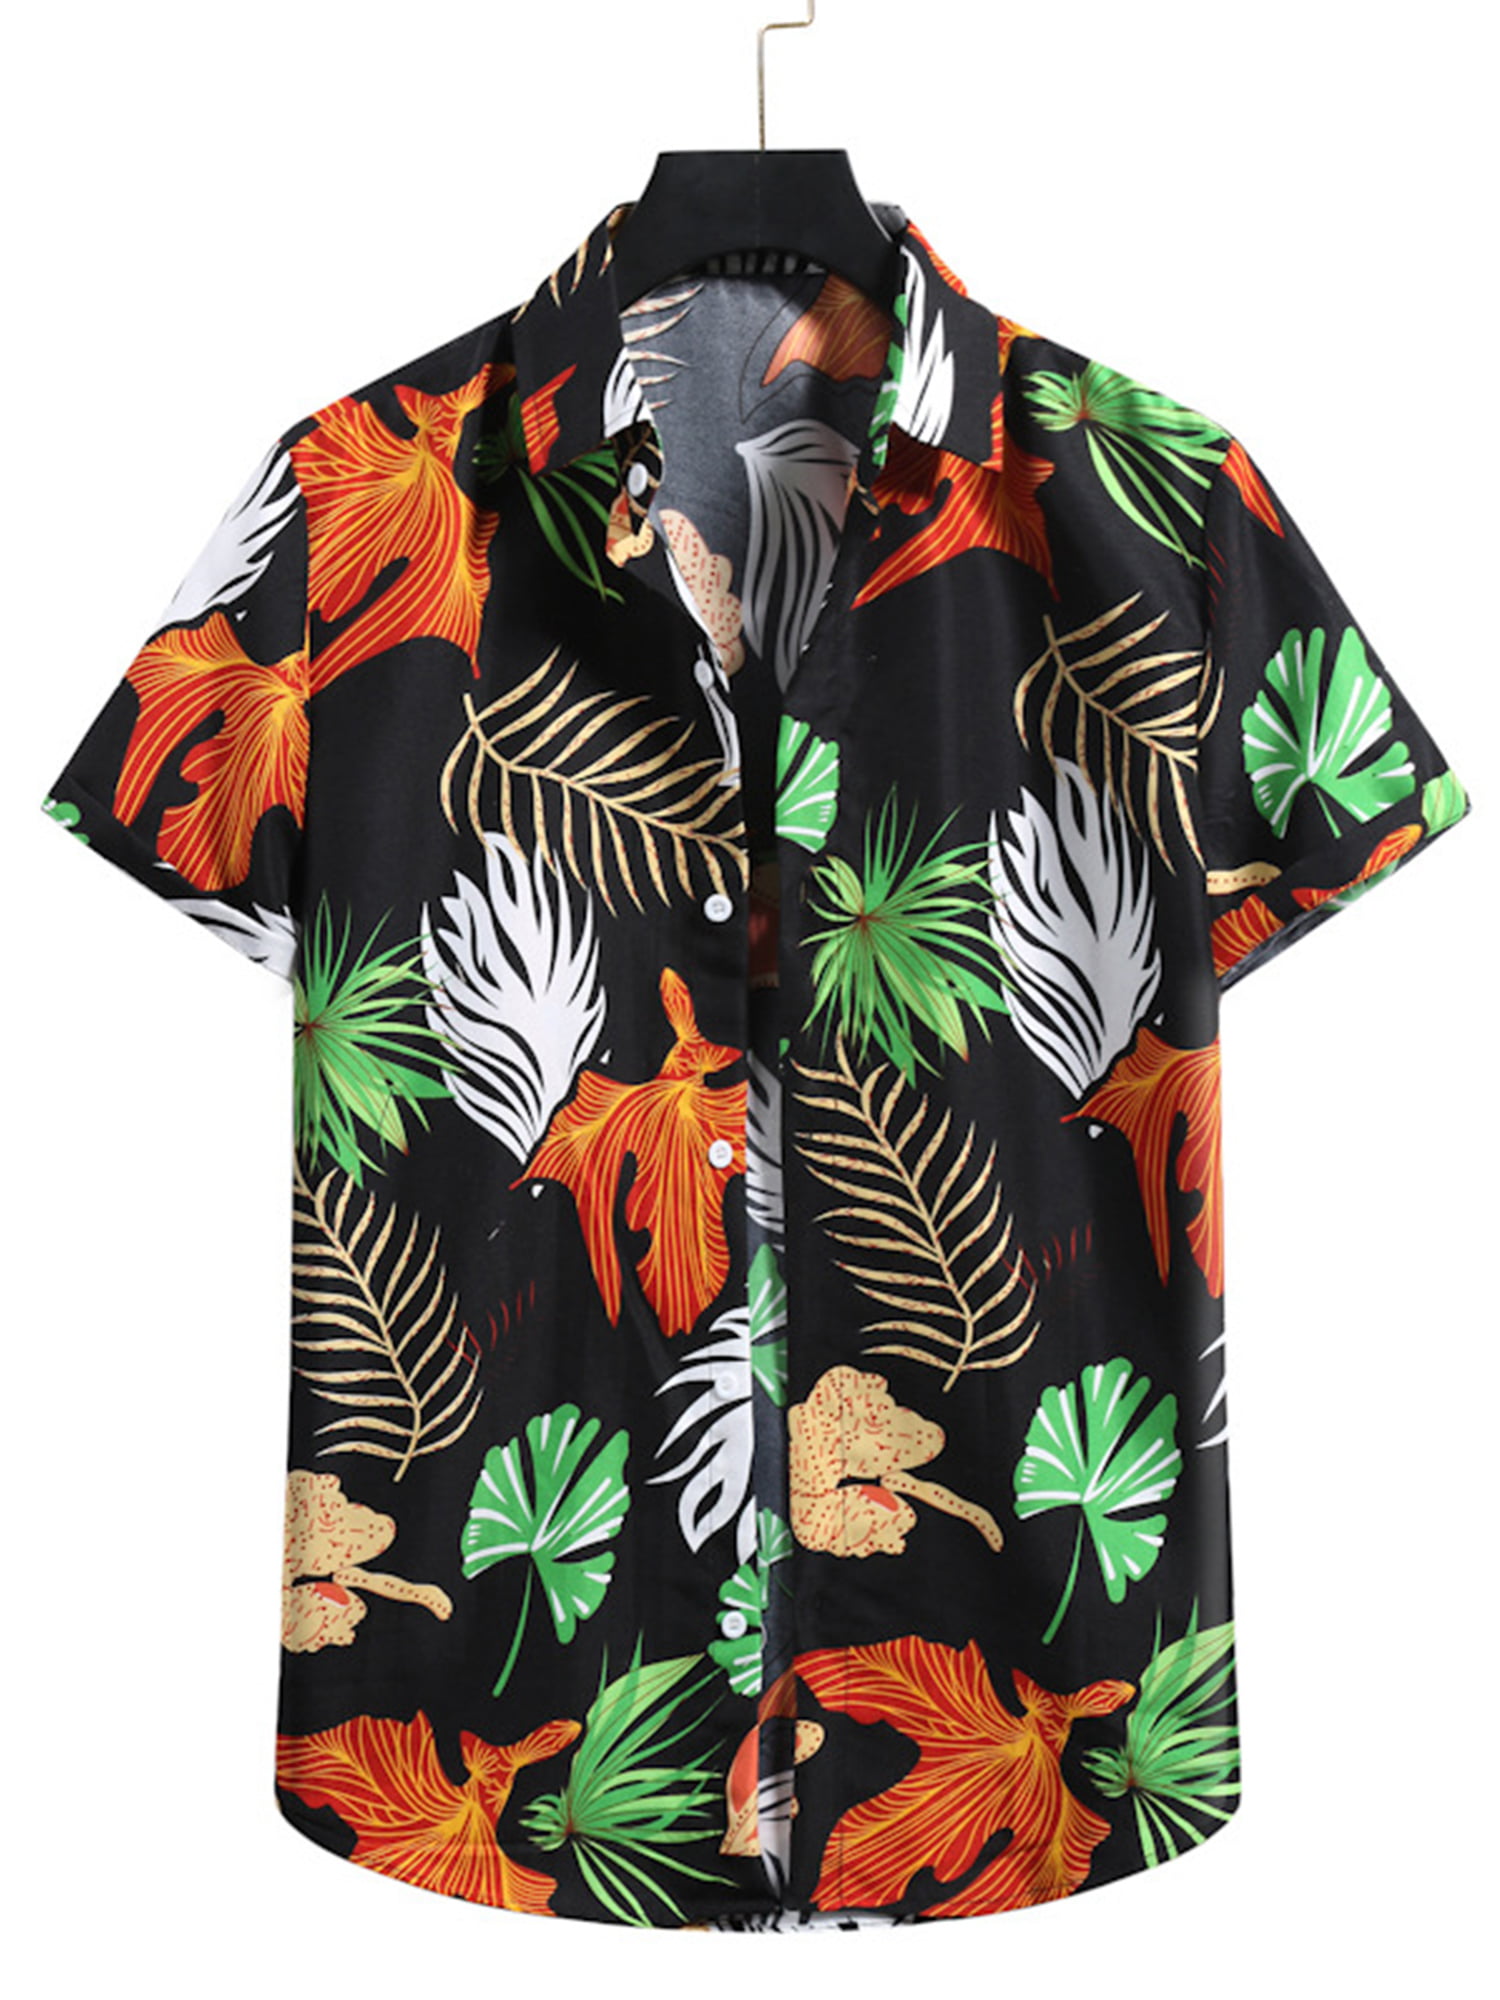 Mens Hawaiian Shirt Summer Aloha Short Sleeve Tropical Casual Button-Down Beach T-Shirts Tops